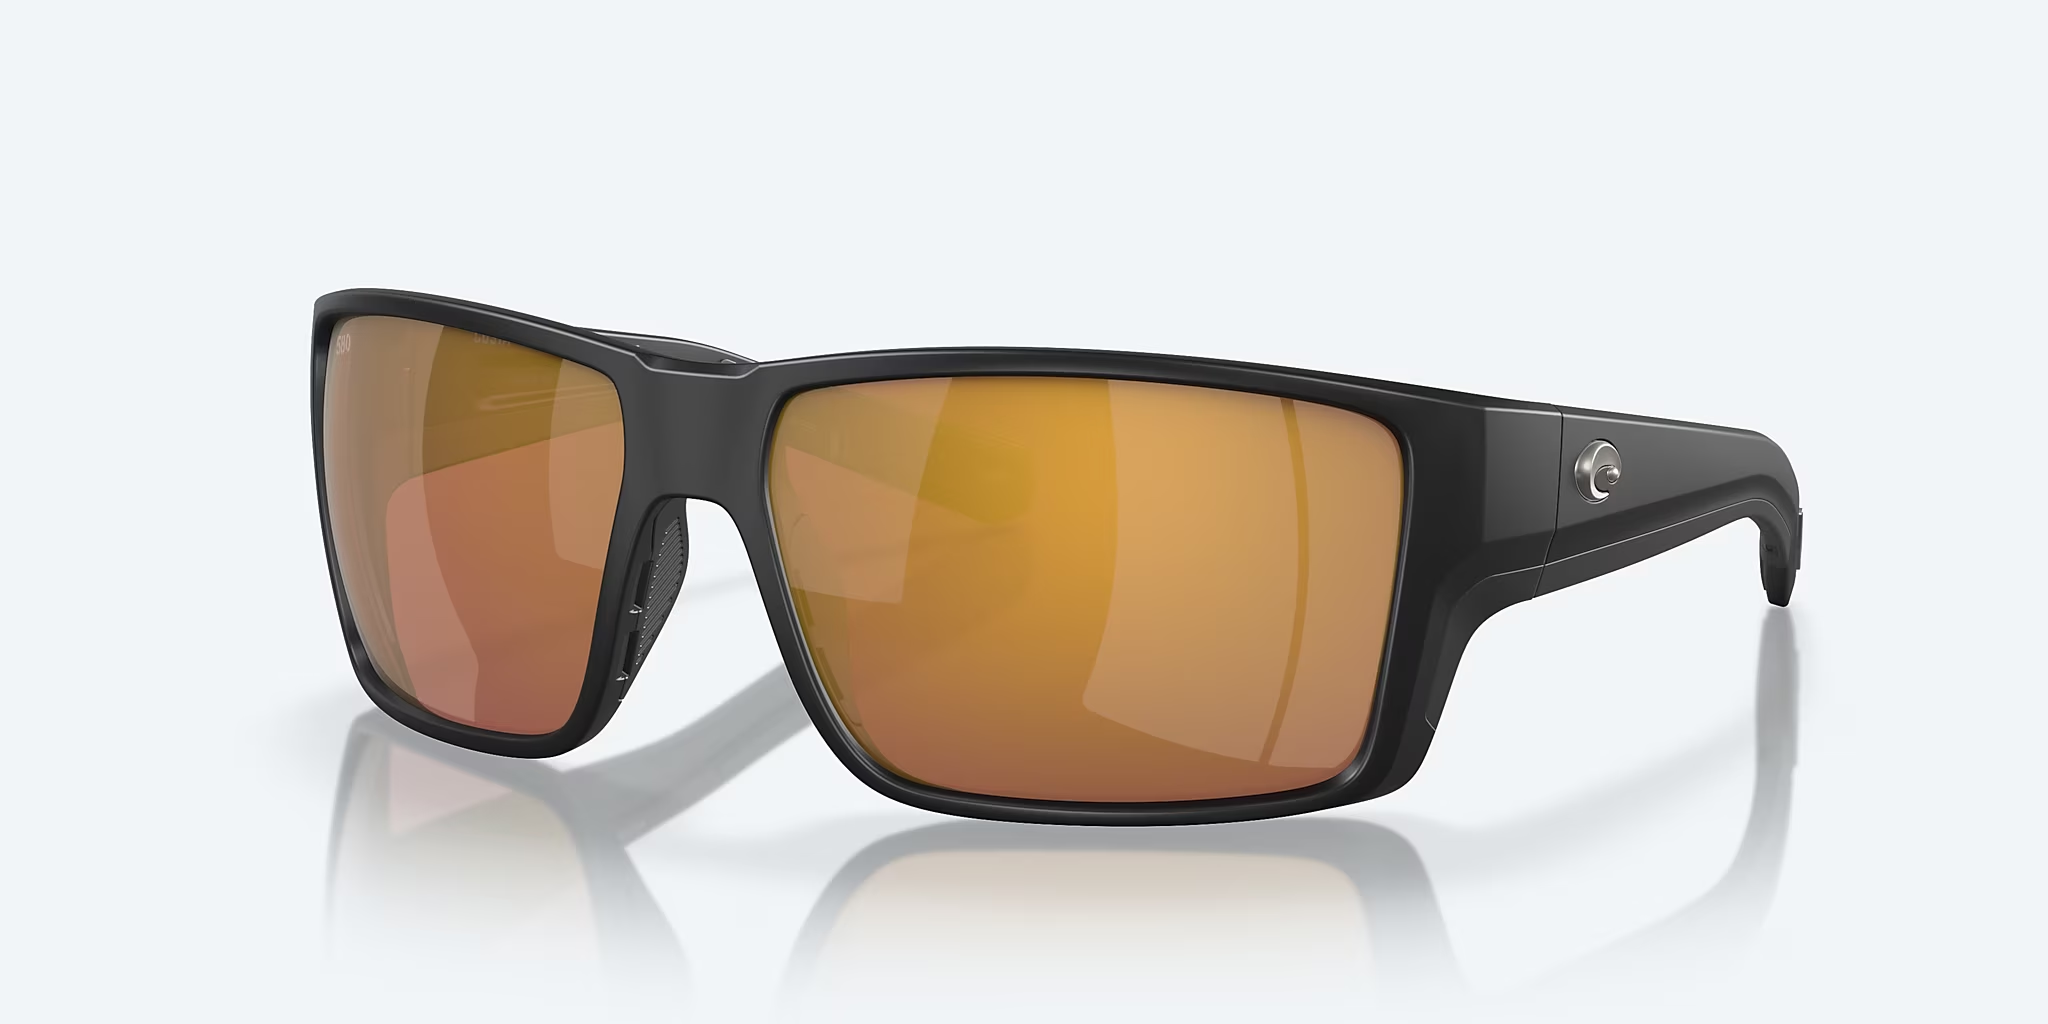 Costa Del Mar Inlet Sunglasses - Shiny Black/Blue Mirror 580P